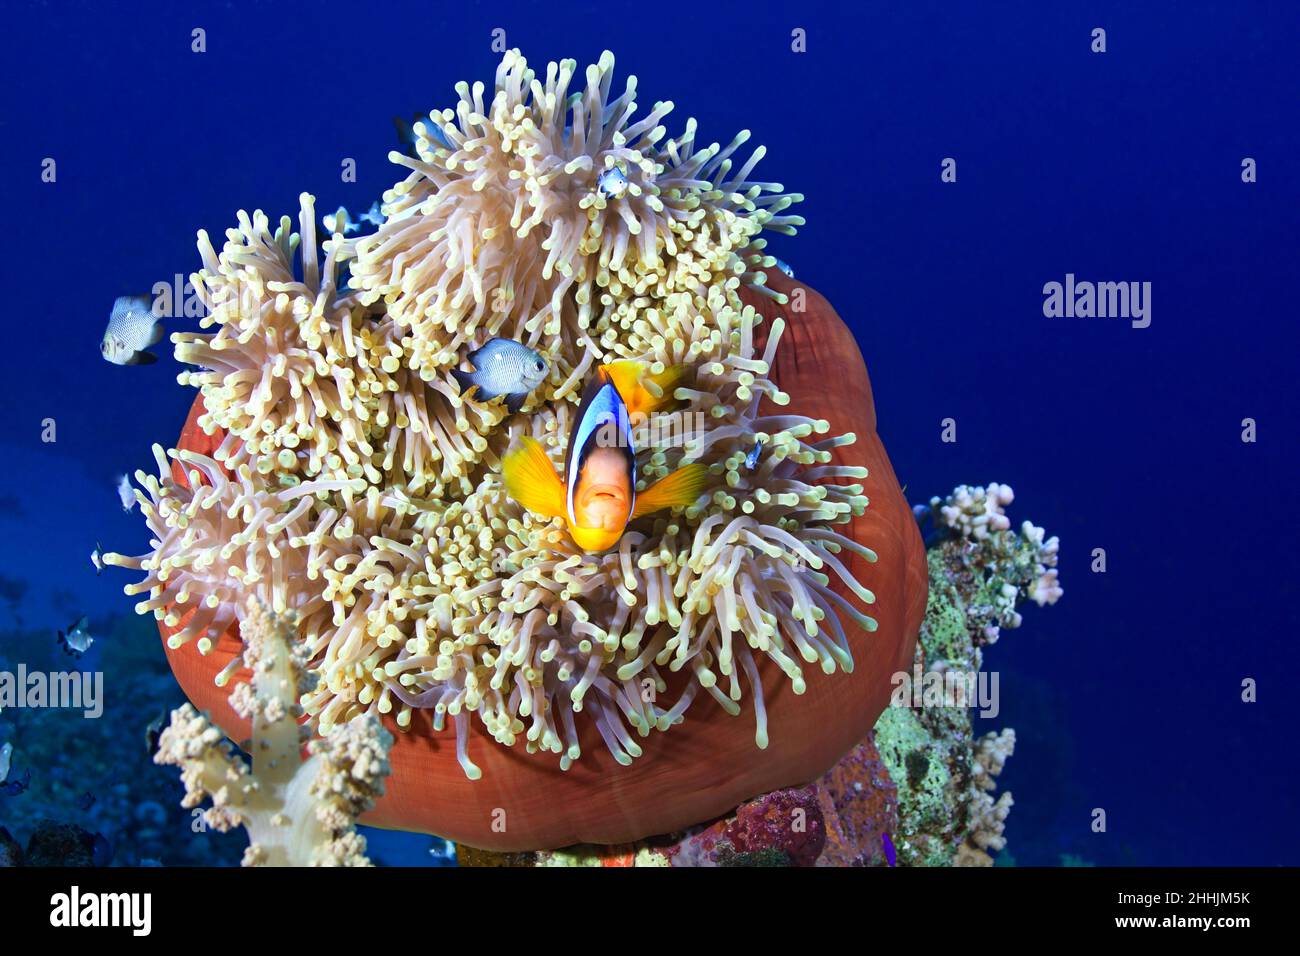 Exotic clown fish fish swimming near marine predatory animal sea anemones in blue water of Red Sea Stock Photo